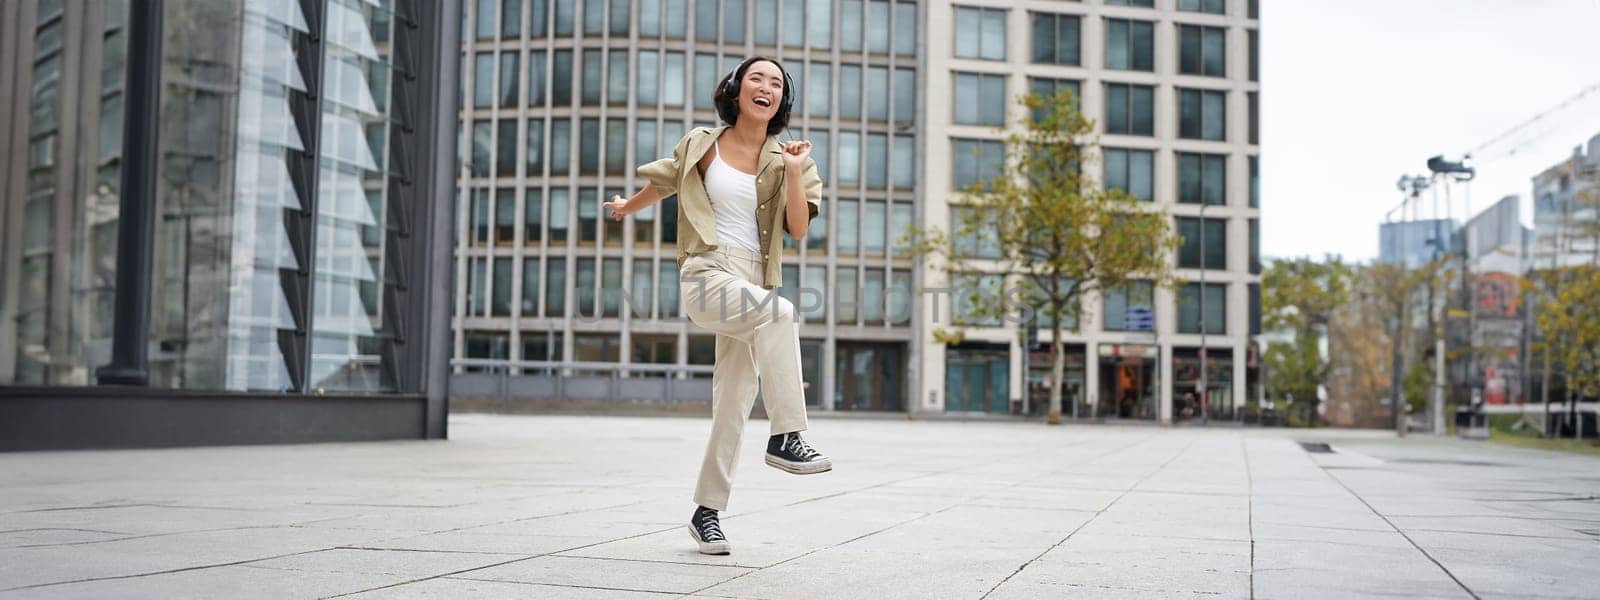 Happy people in city. Upbeat young girl dancing on street in headphones, listening music in headphones by Benzoix